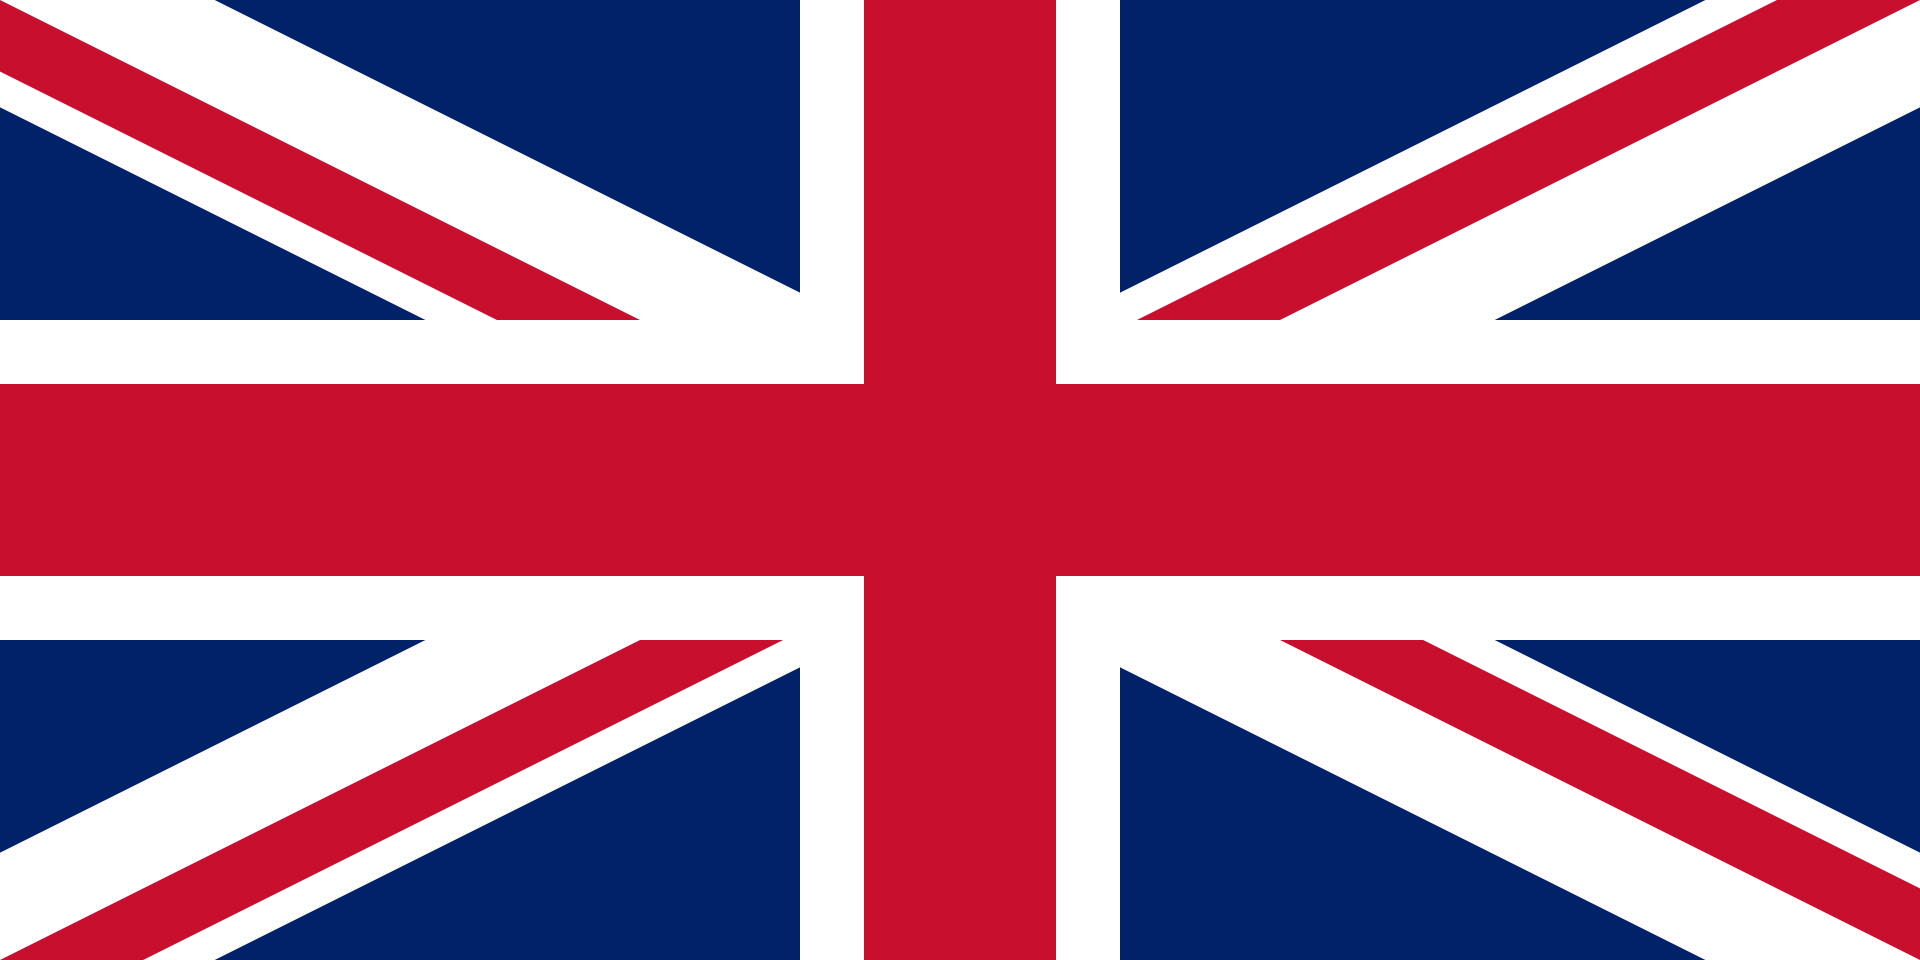 1920px-Flag_of_the_United_Kingdom.svg